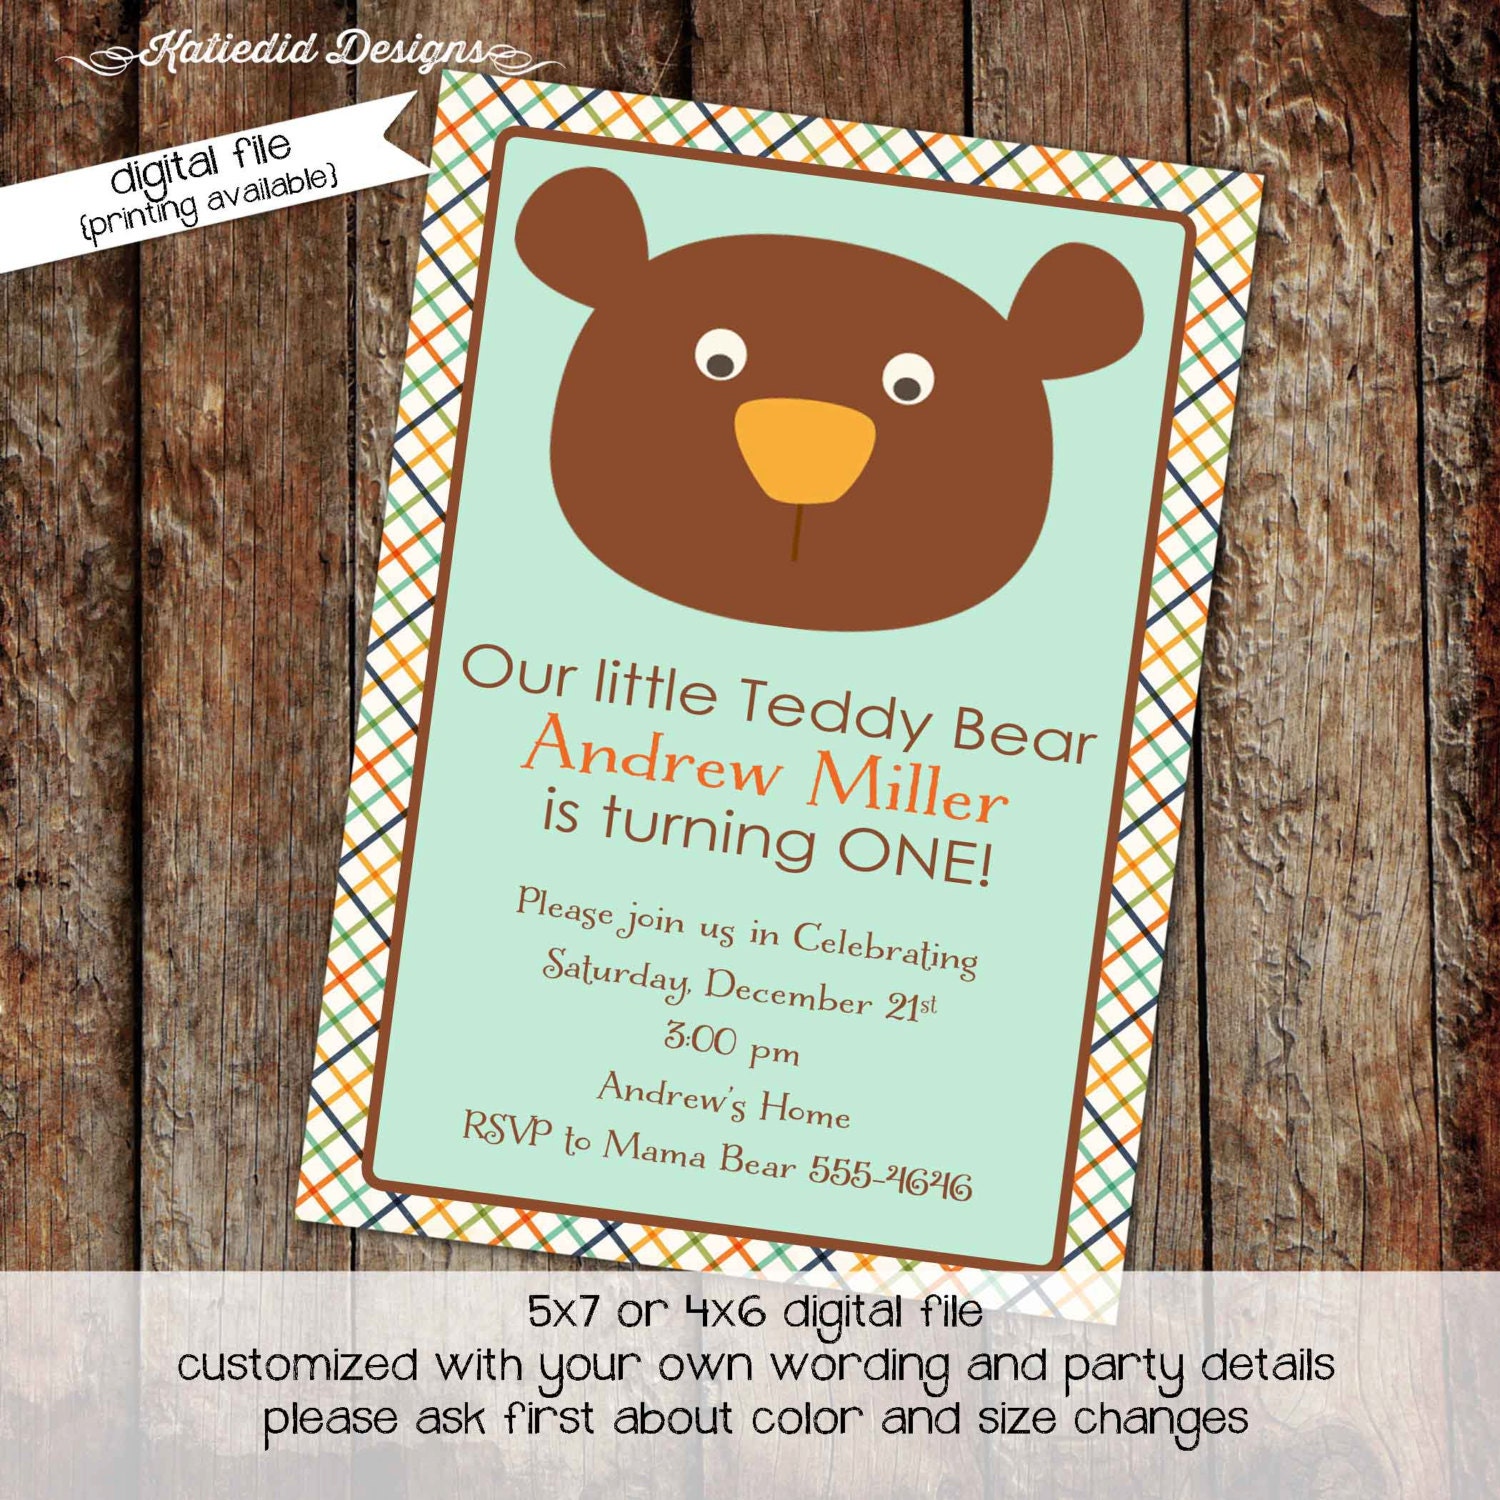 birthday party invitations with teddy bear theme digital